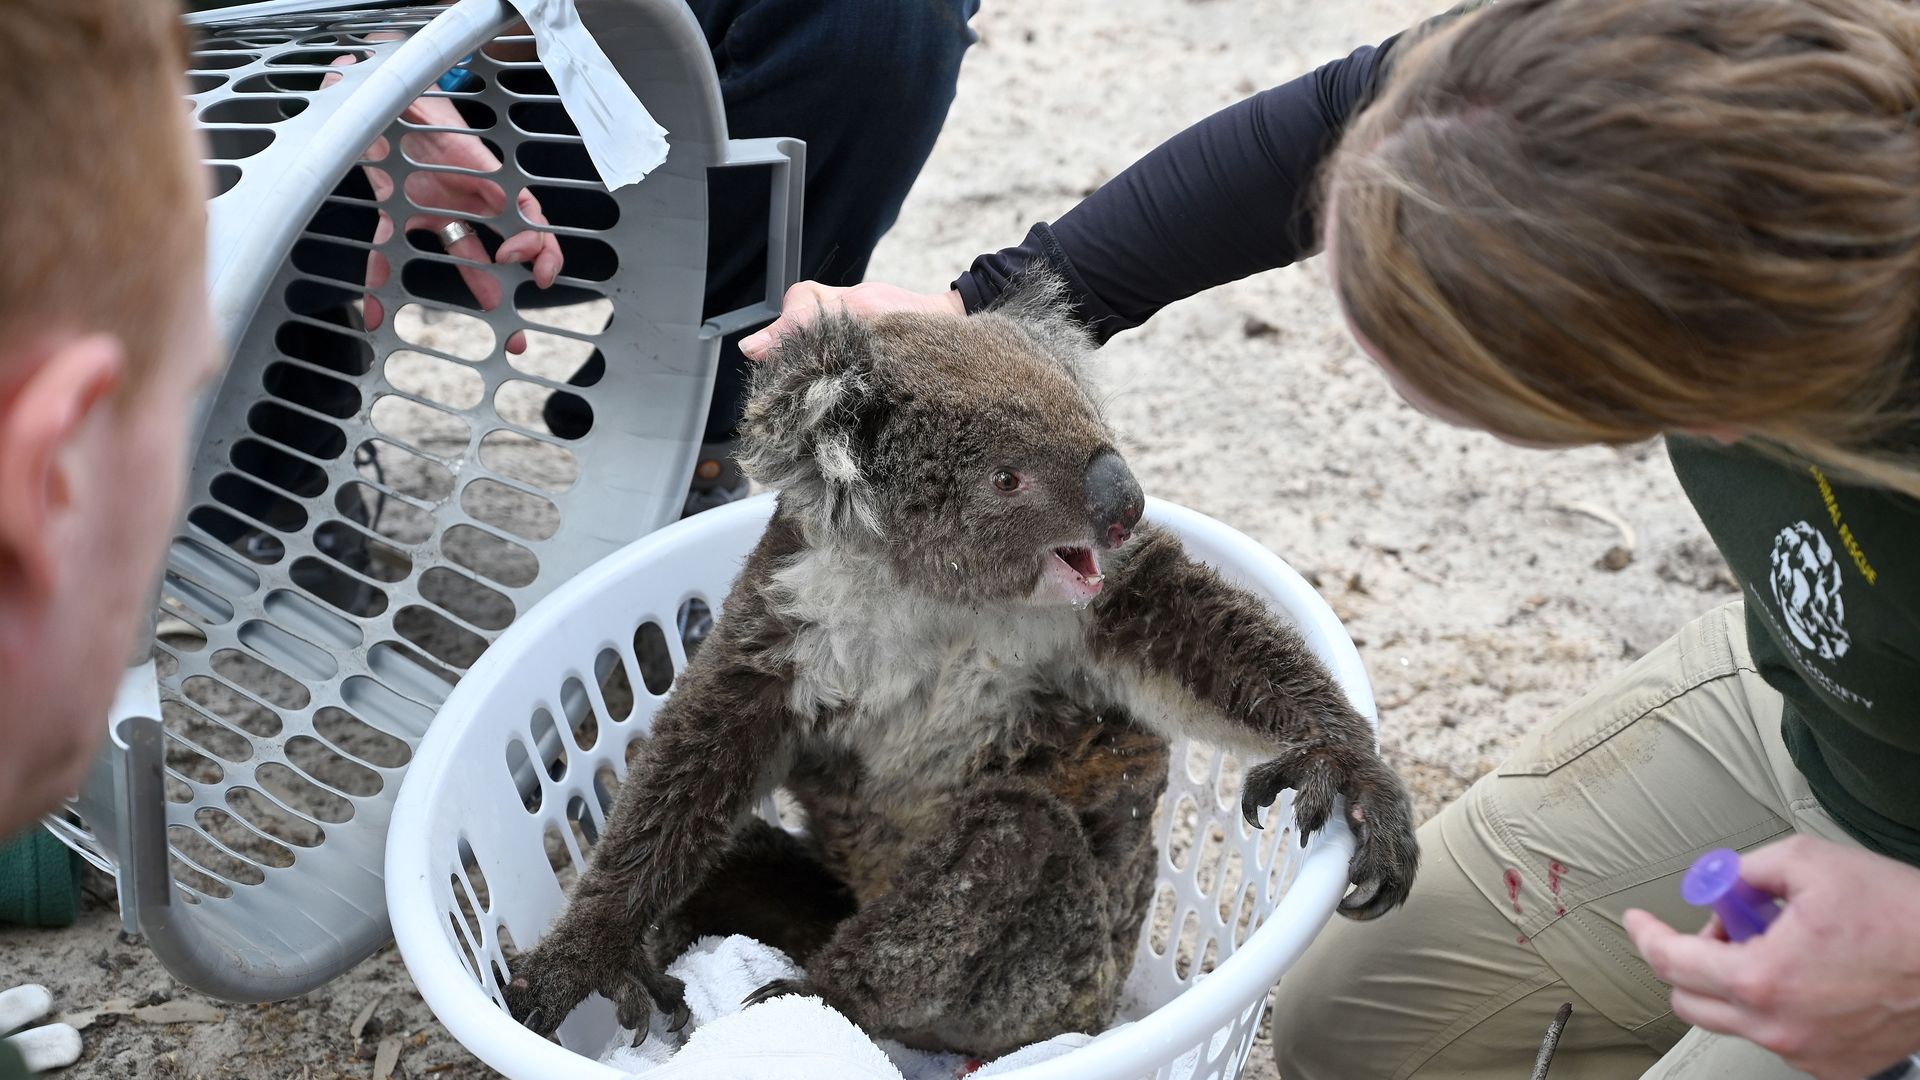 Humane Society International Crisis Response Specialist, Kelly Donithan (R) checks an injured Koala she just rescued on Kangaroo Island on January 15